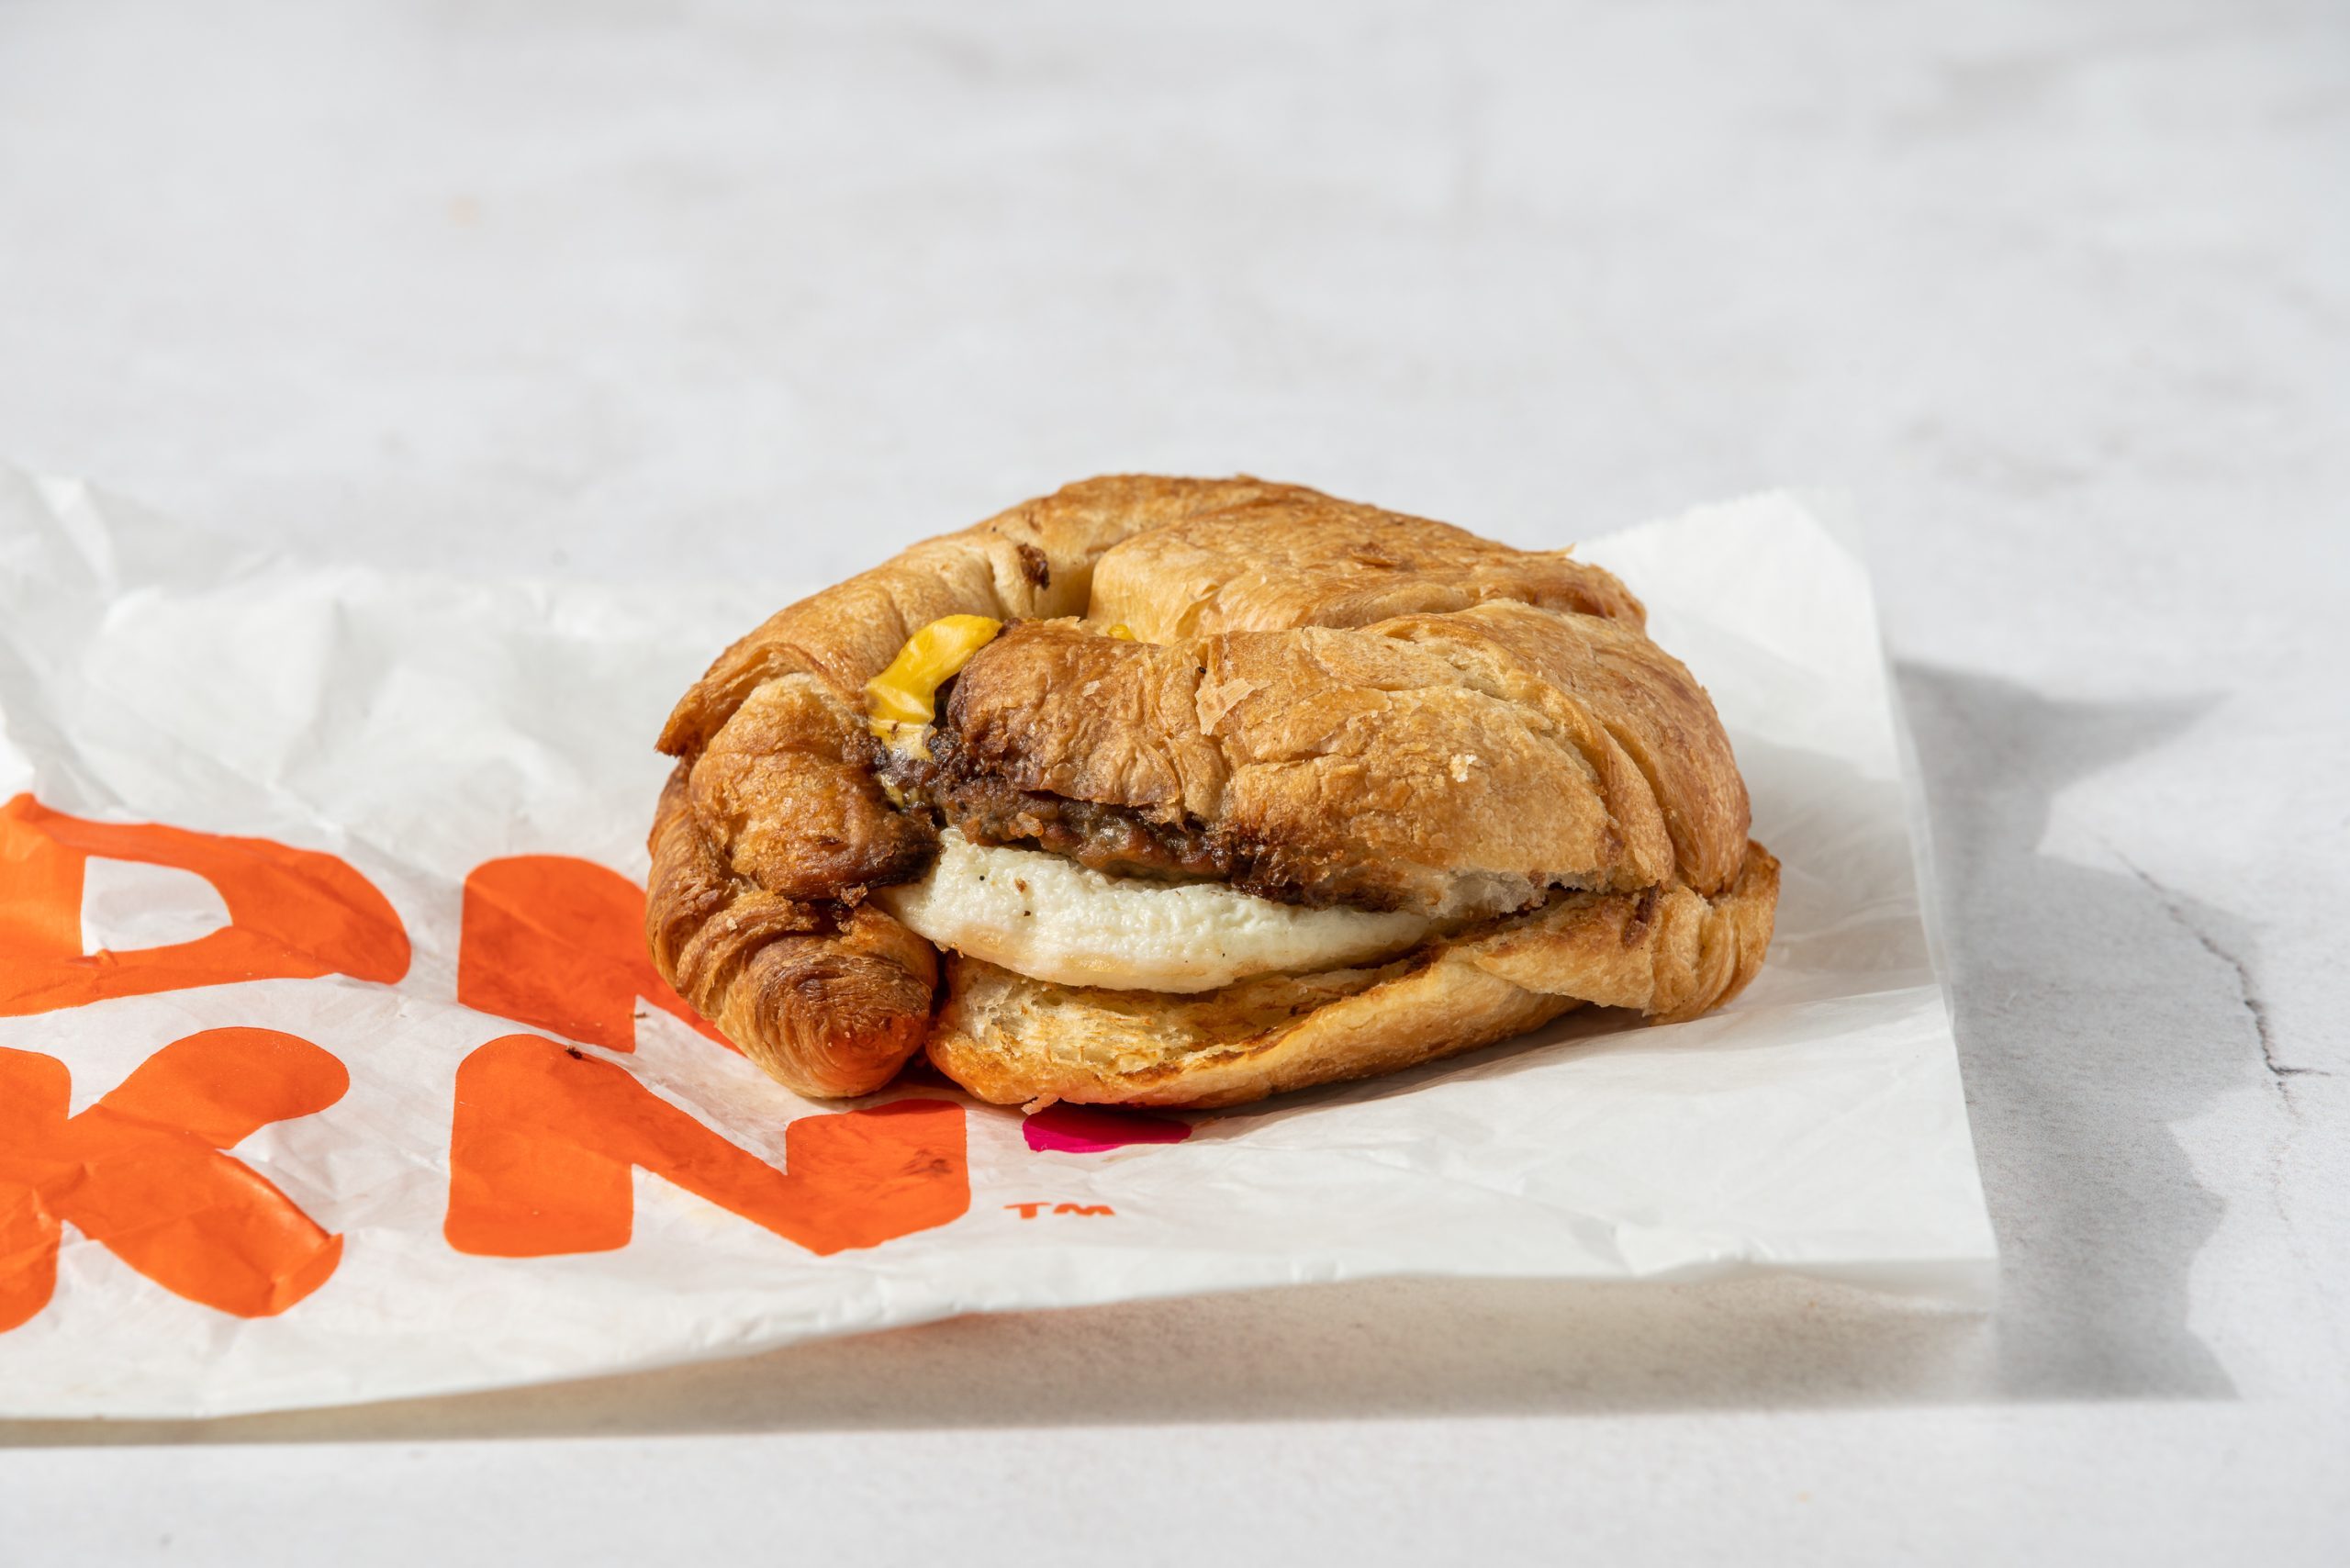 https://www.tasteofhome.com/wp-content/uploads/2022/03/breakfast-sandwiches-dunkin-scaled.jpg?fit=700%2C467